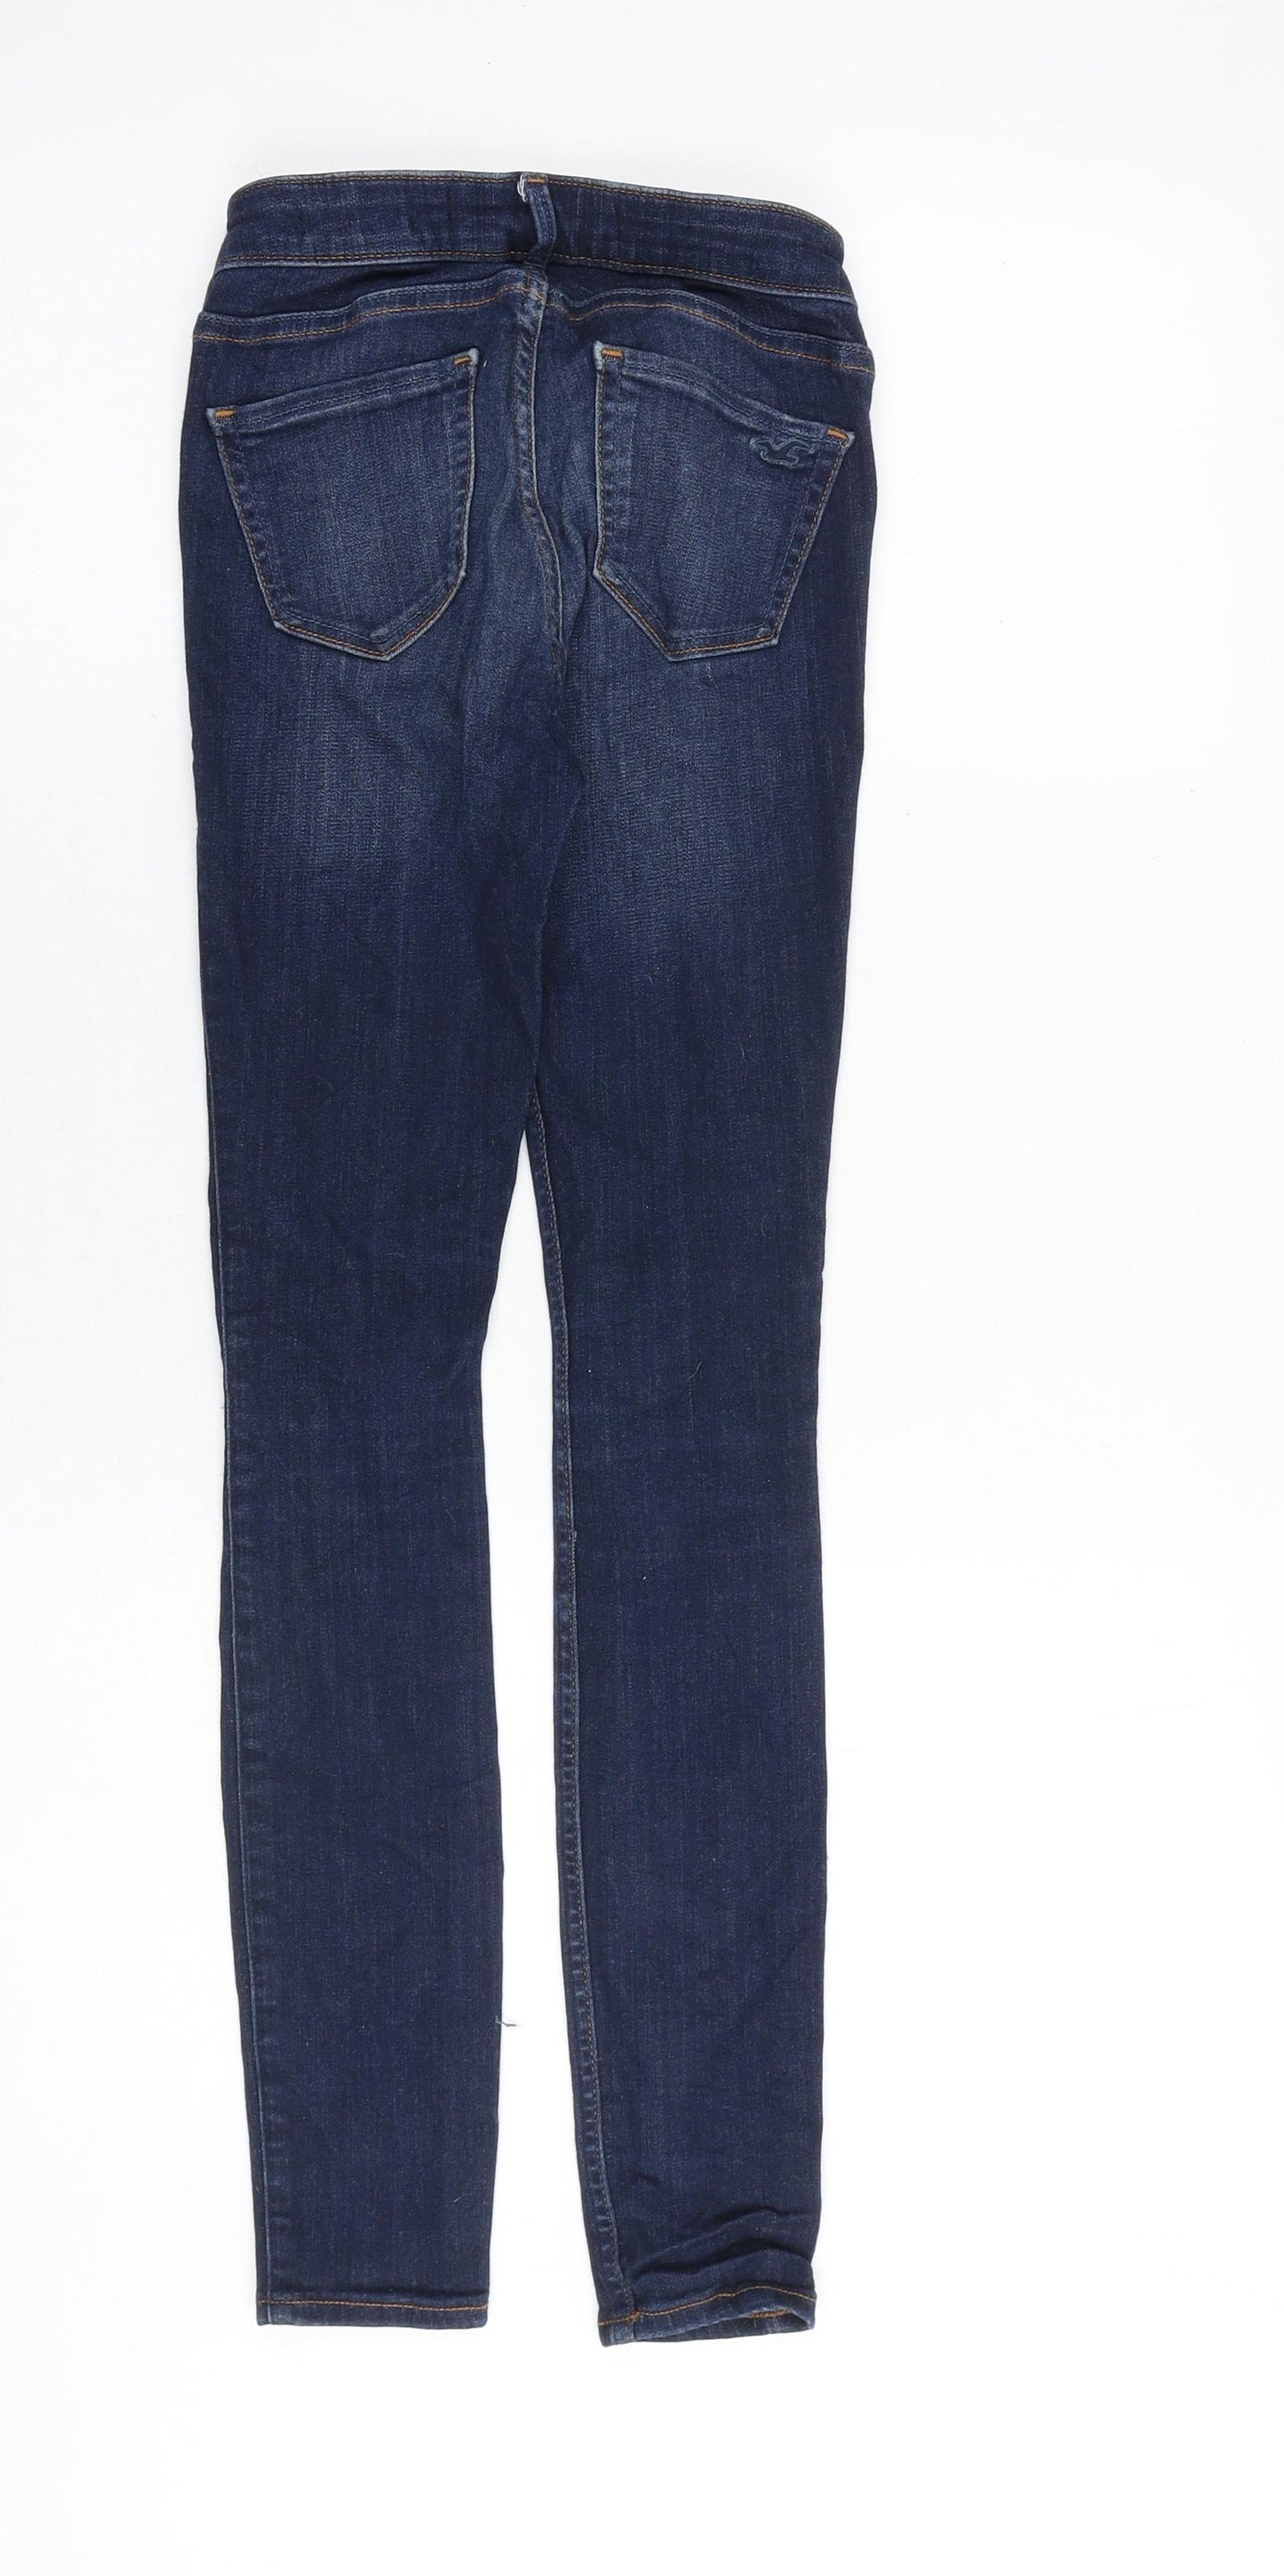 Hollister Womens Blue Cotton Skinny Jeans Size 23 in Regular Zip